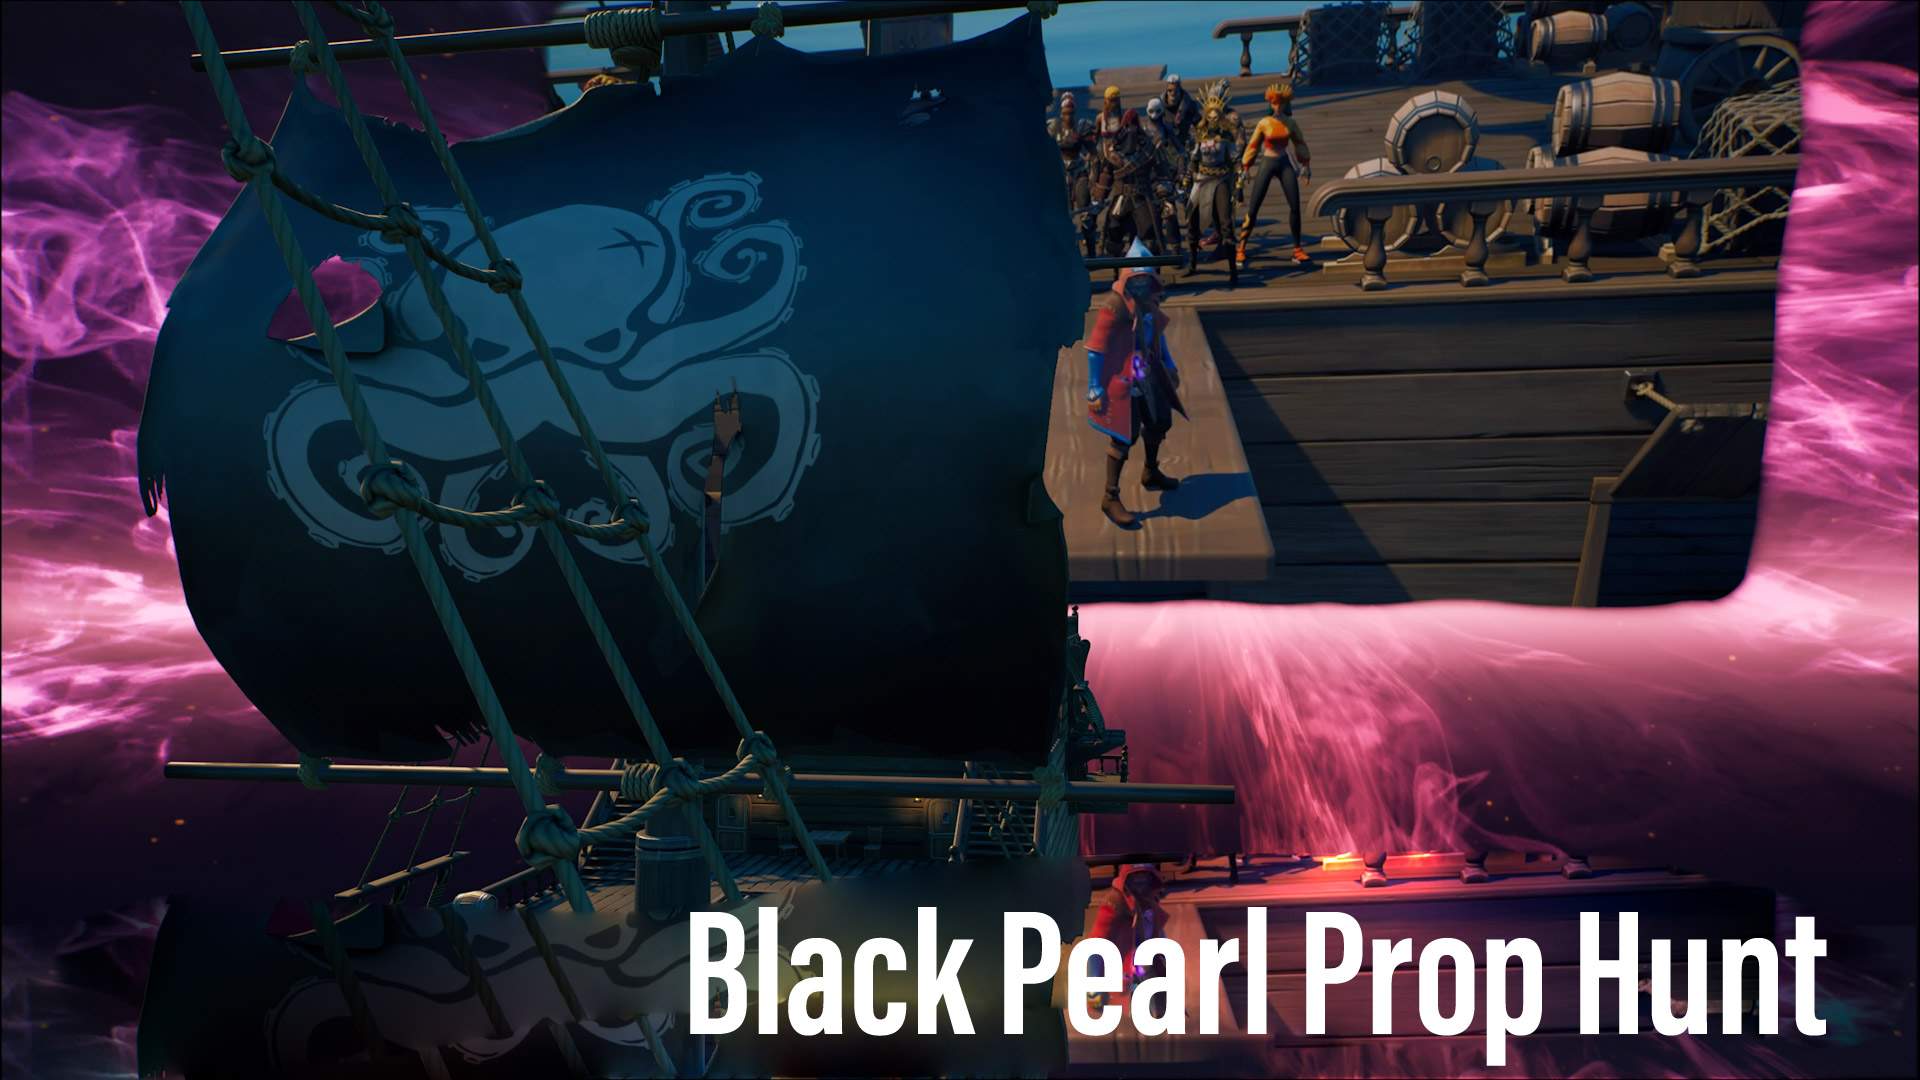 Black Pearl Prop hunt pirates